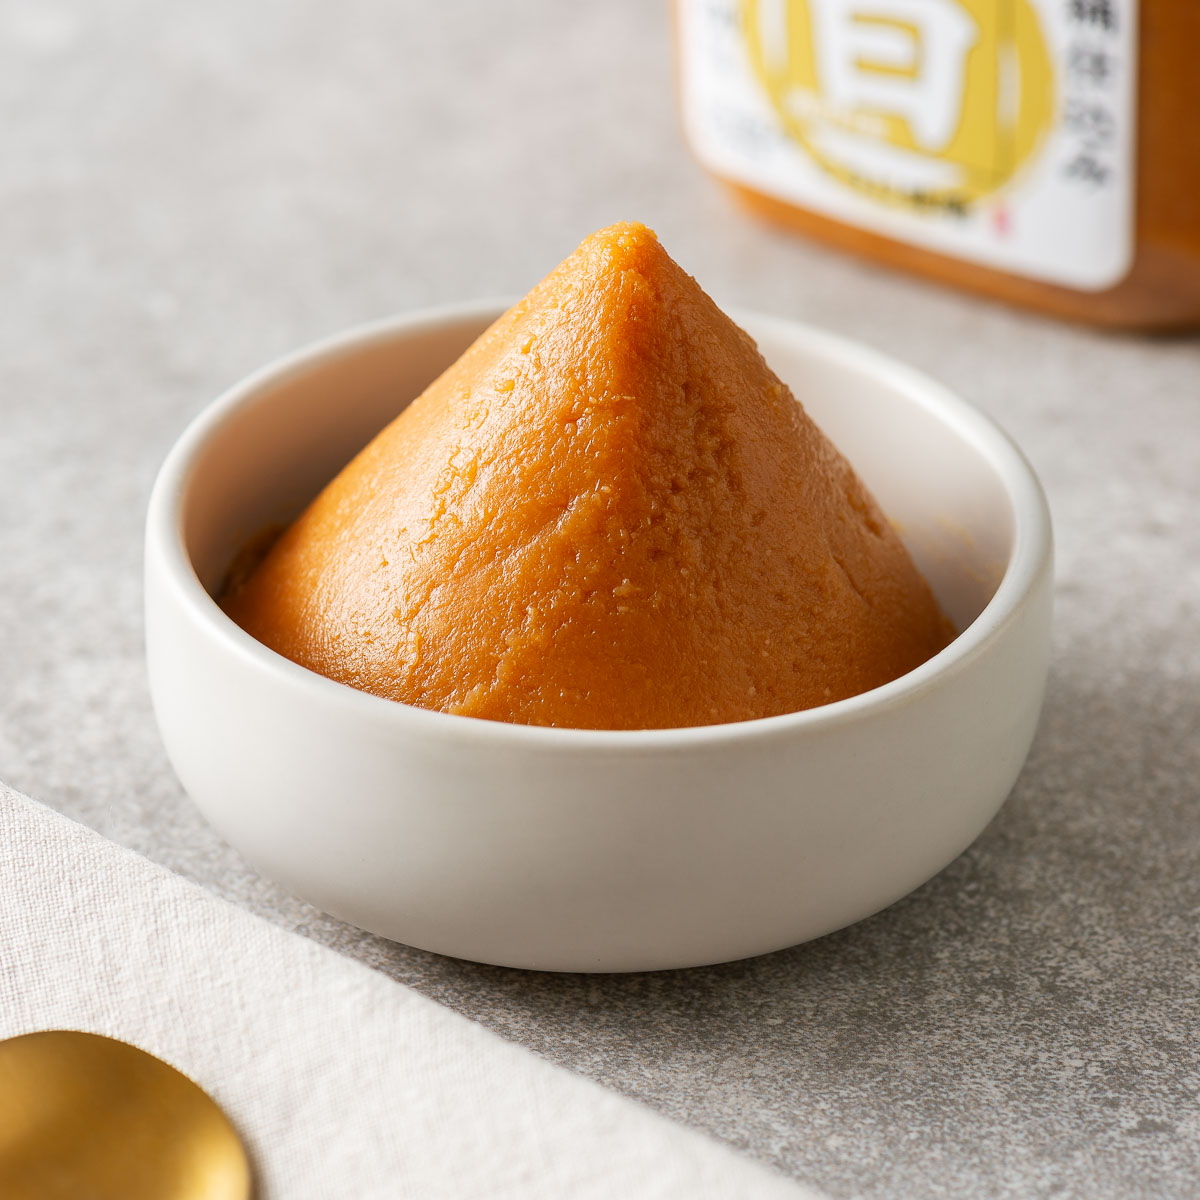 Umami unleashed: The best miso paste substitutes